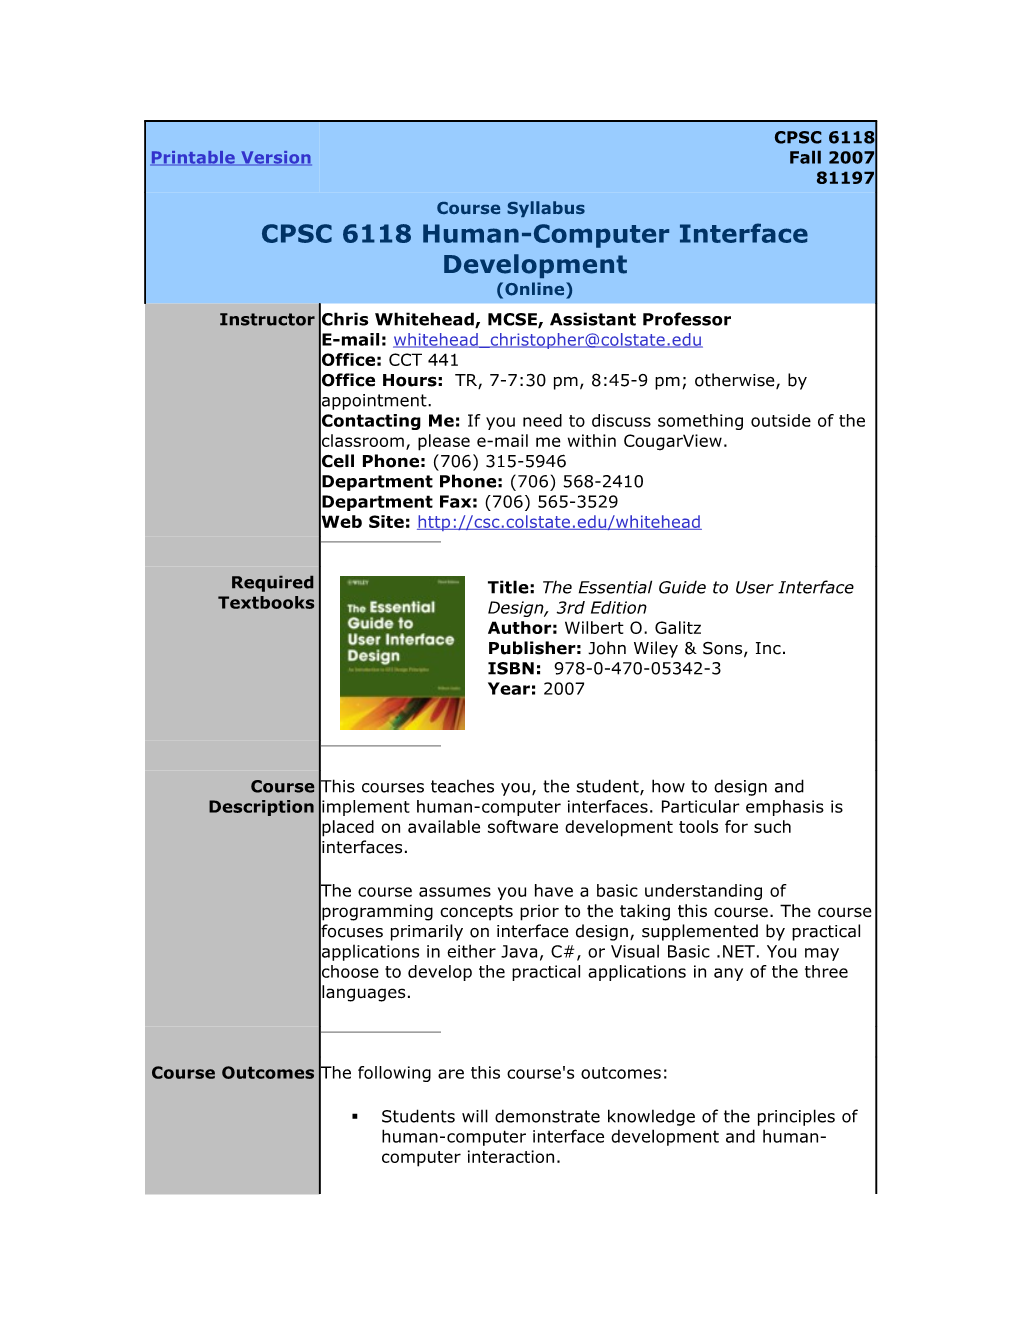 Course Syllabuscpsc 6118 Human-Computer Interface Development(Online)